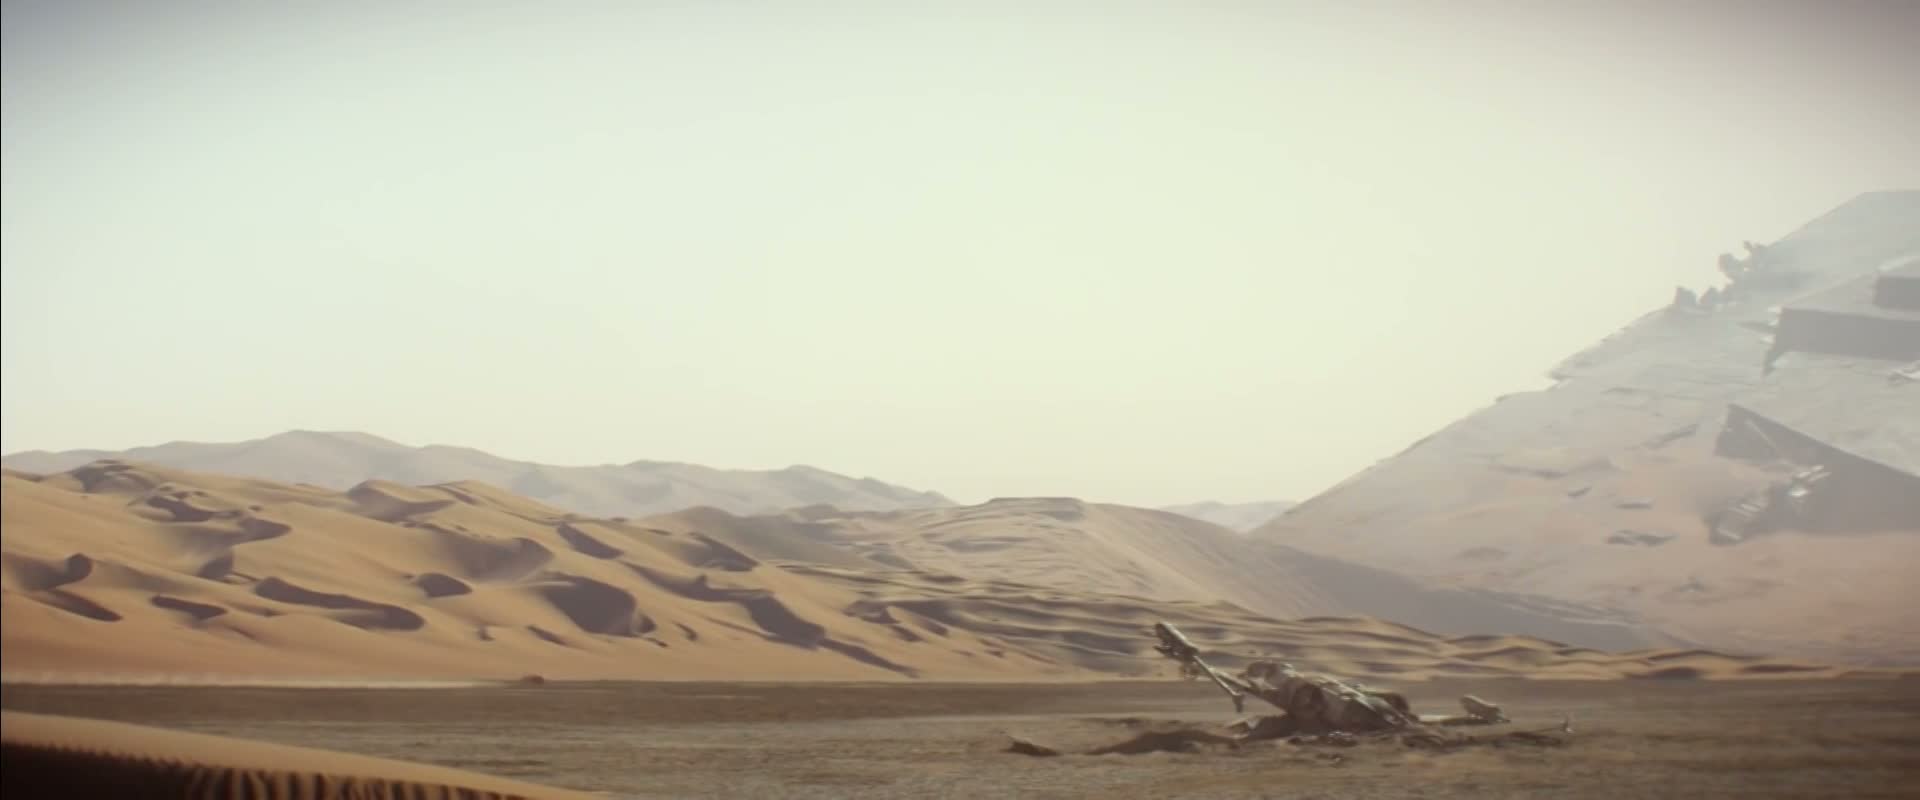 Star Wars: Síla se probouzí - trailer 2 (dabing)